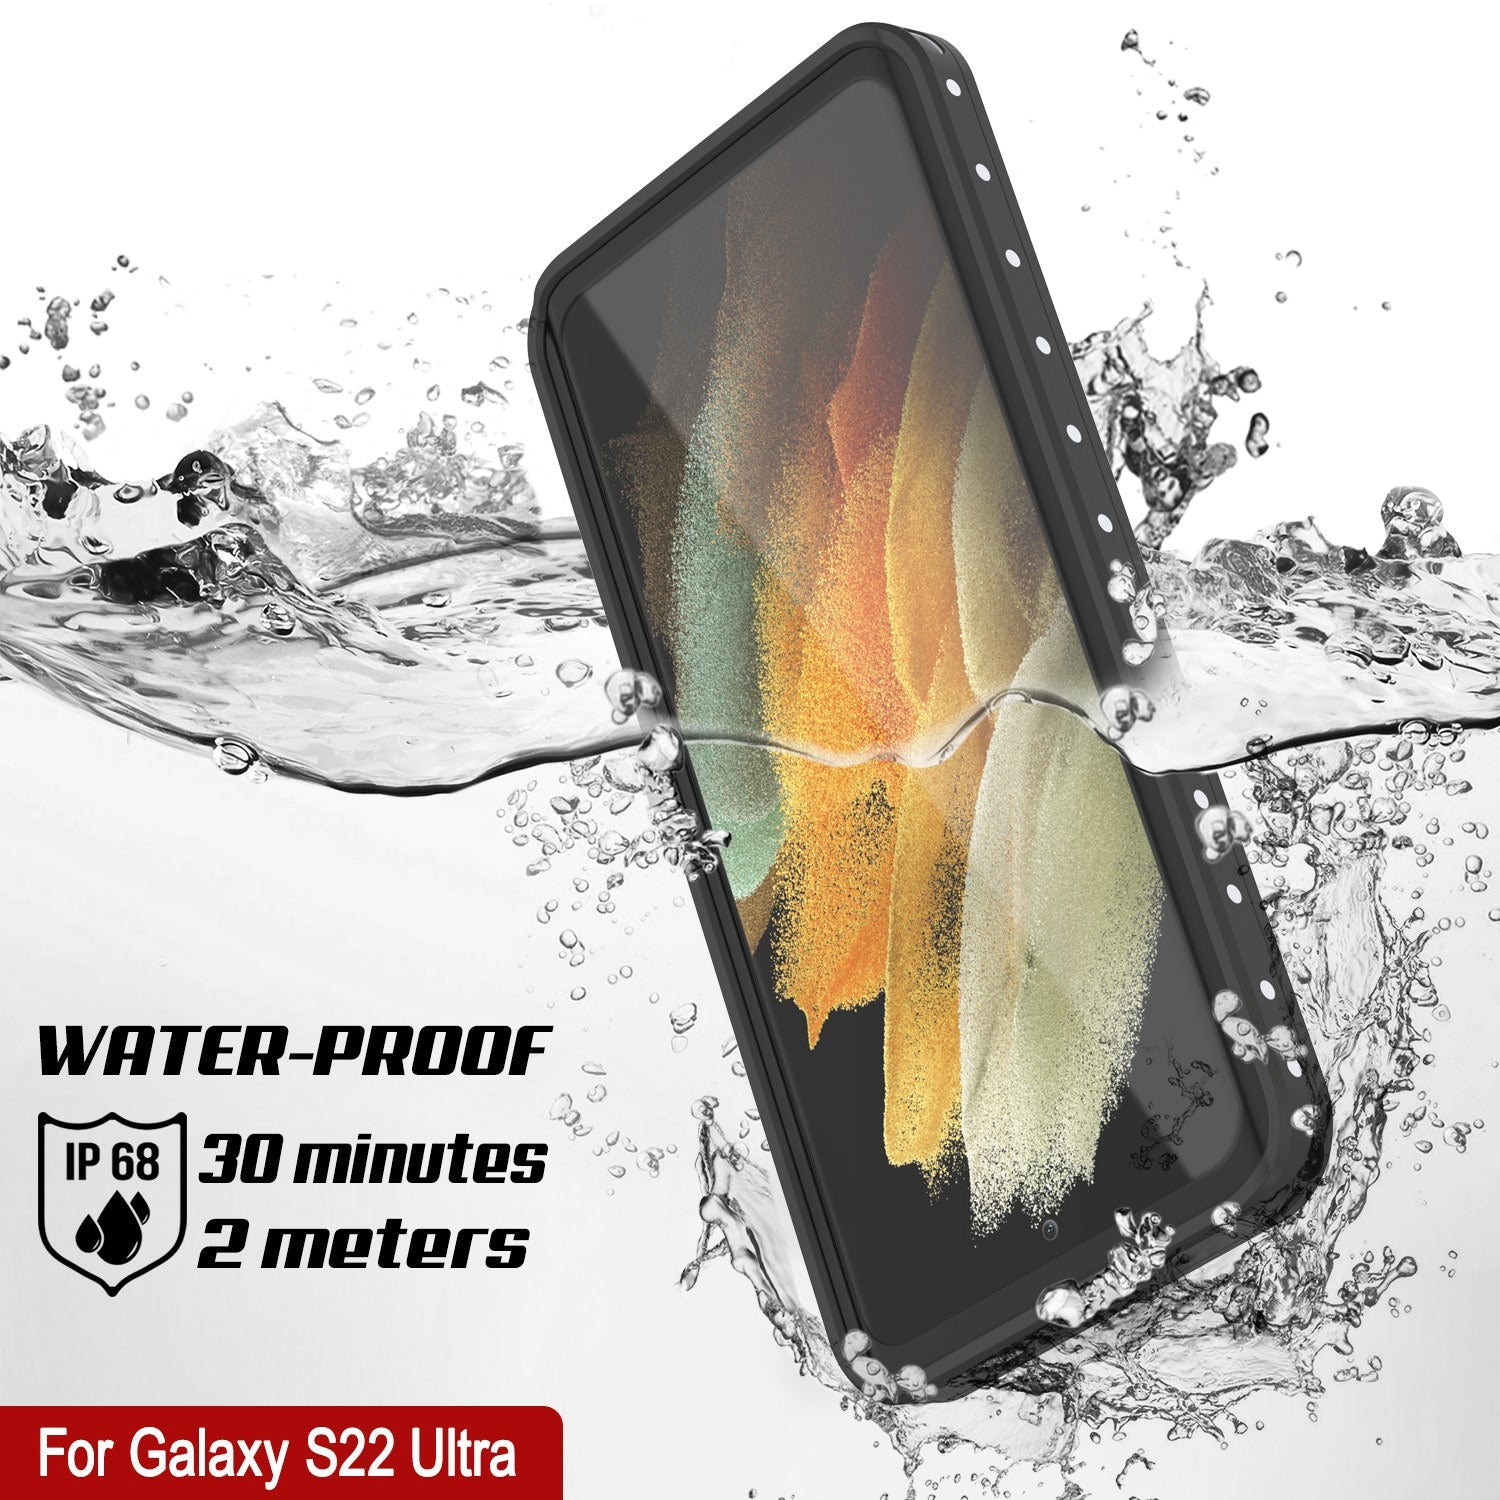 Galaxy S22 Ultra Waterproof Case, Punkcase StudStar White Thin 6.6ft Underwater IP68 Shock/Snow Proof